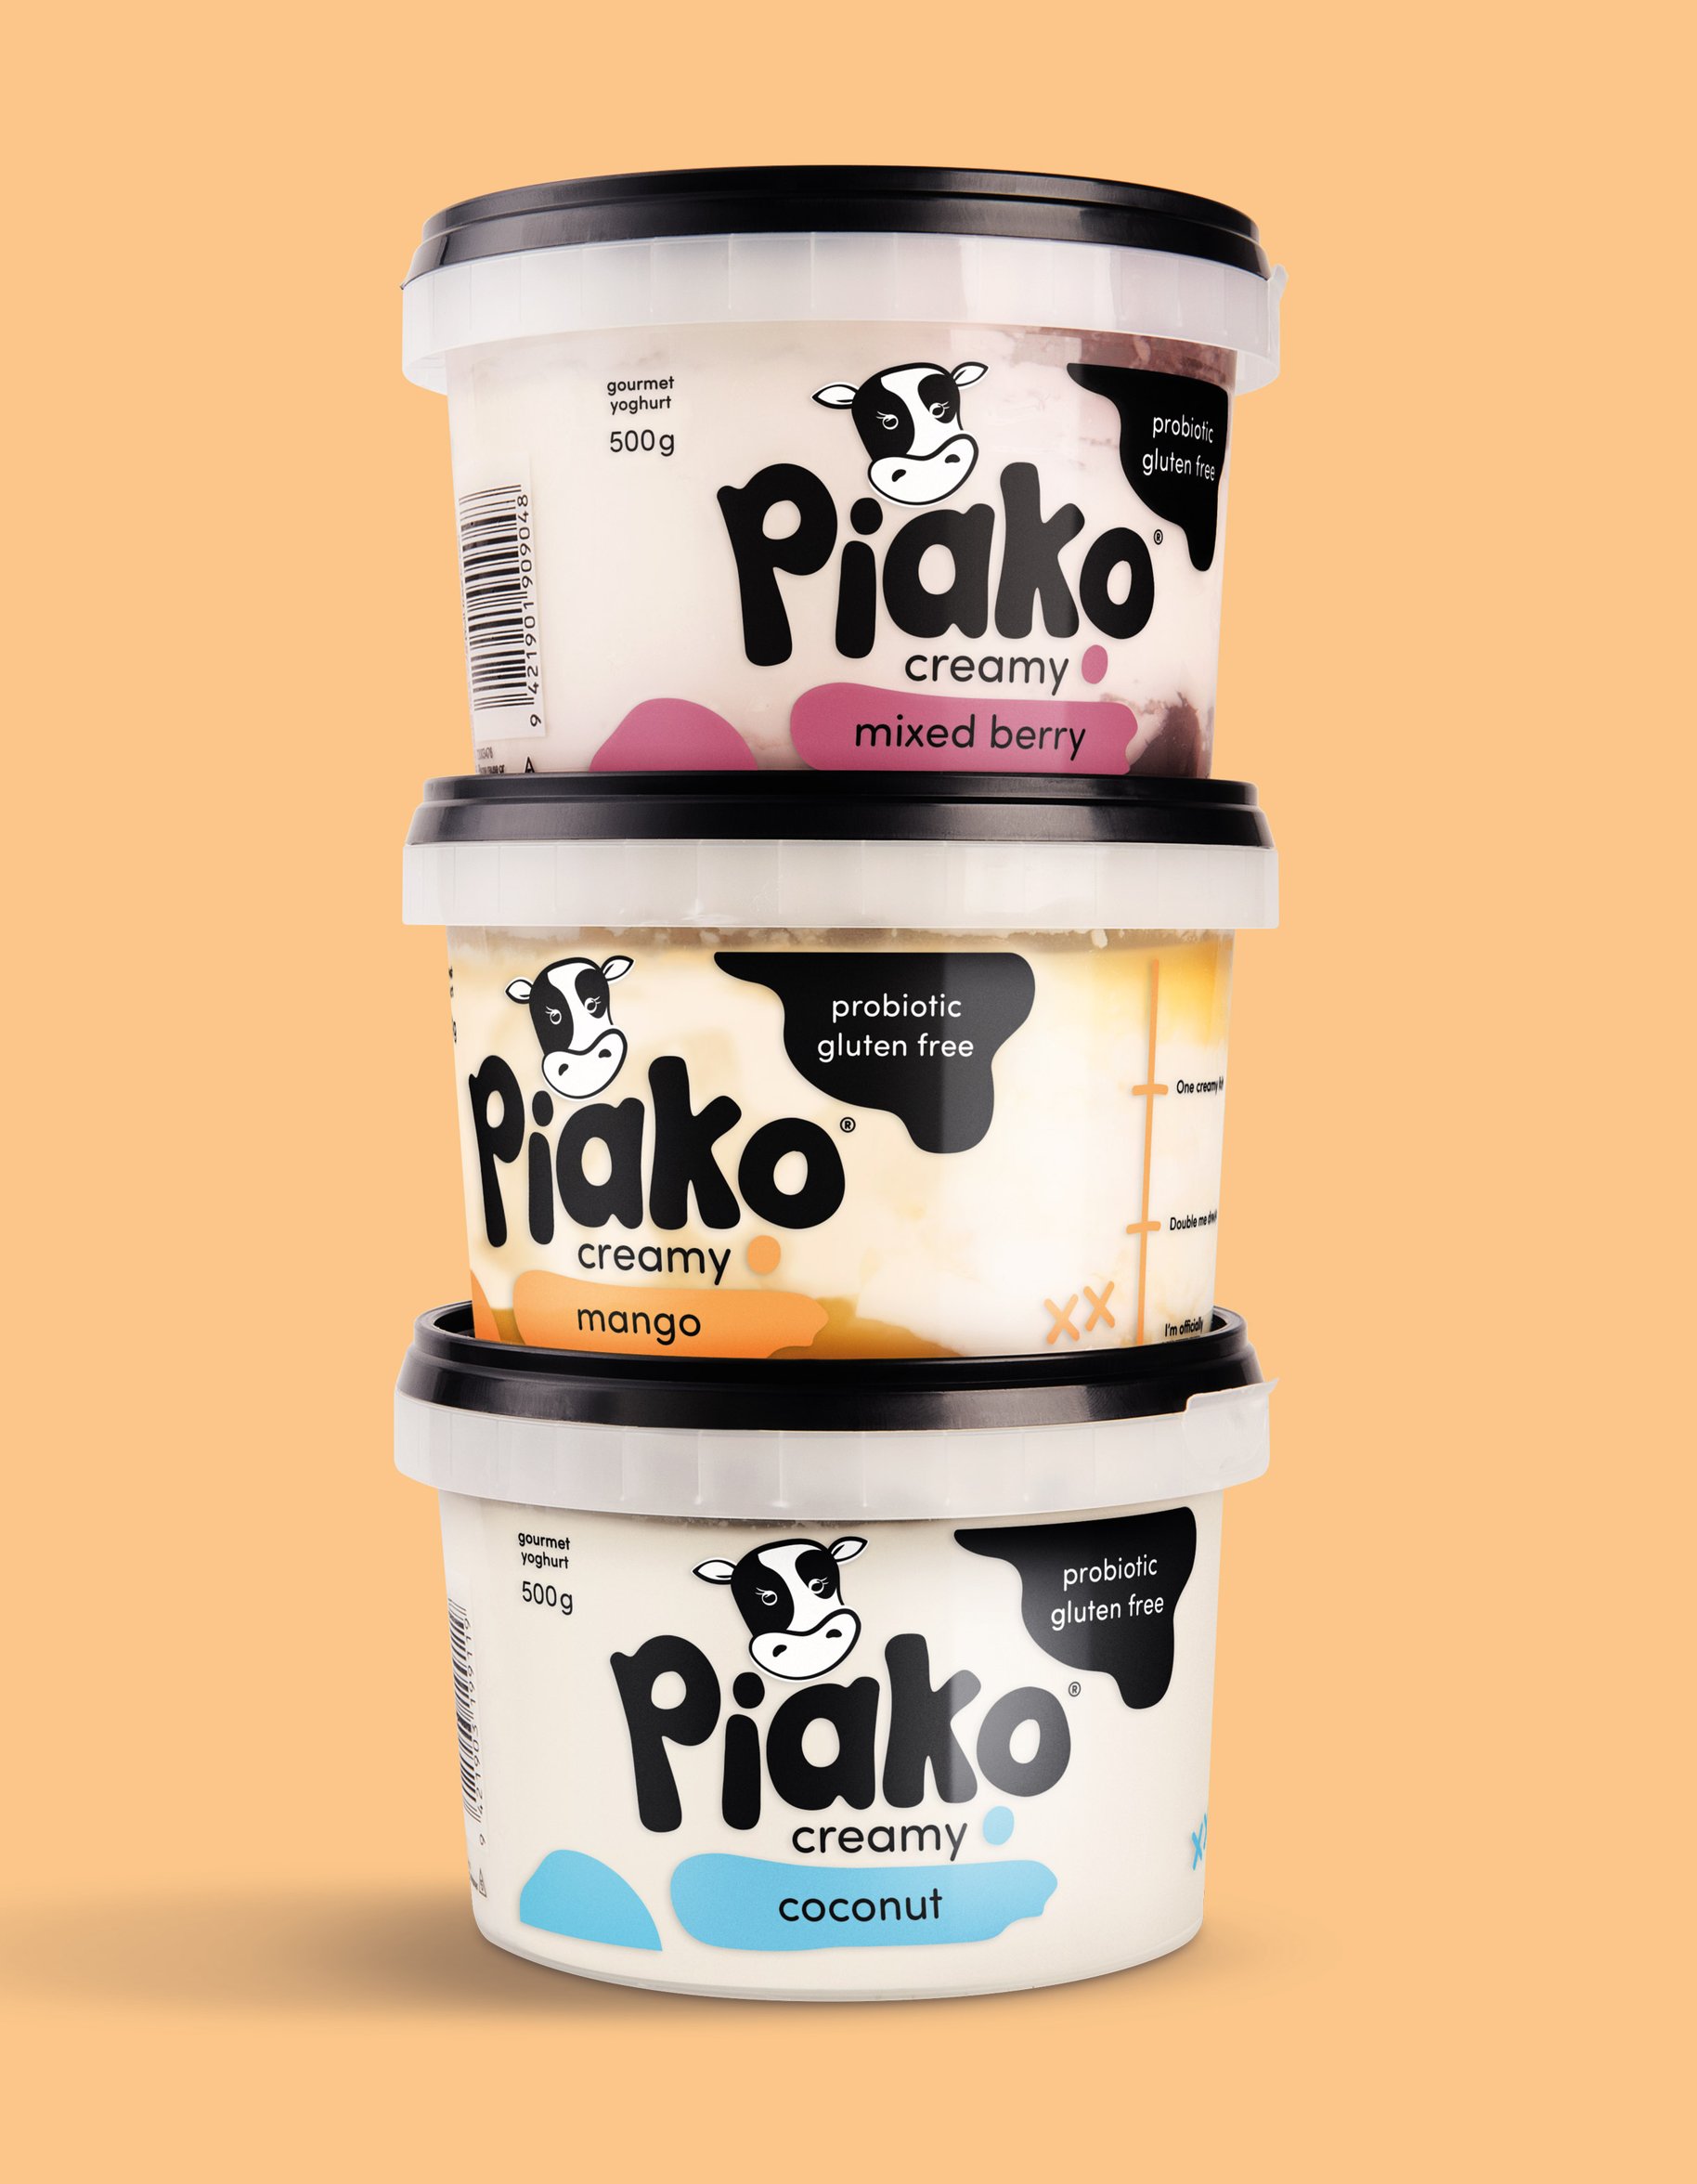 Piako Creamy yoghurt packaging coconut mango mixed berry